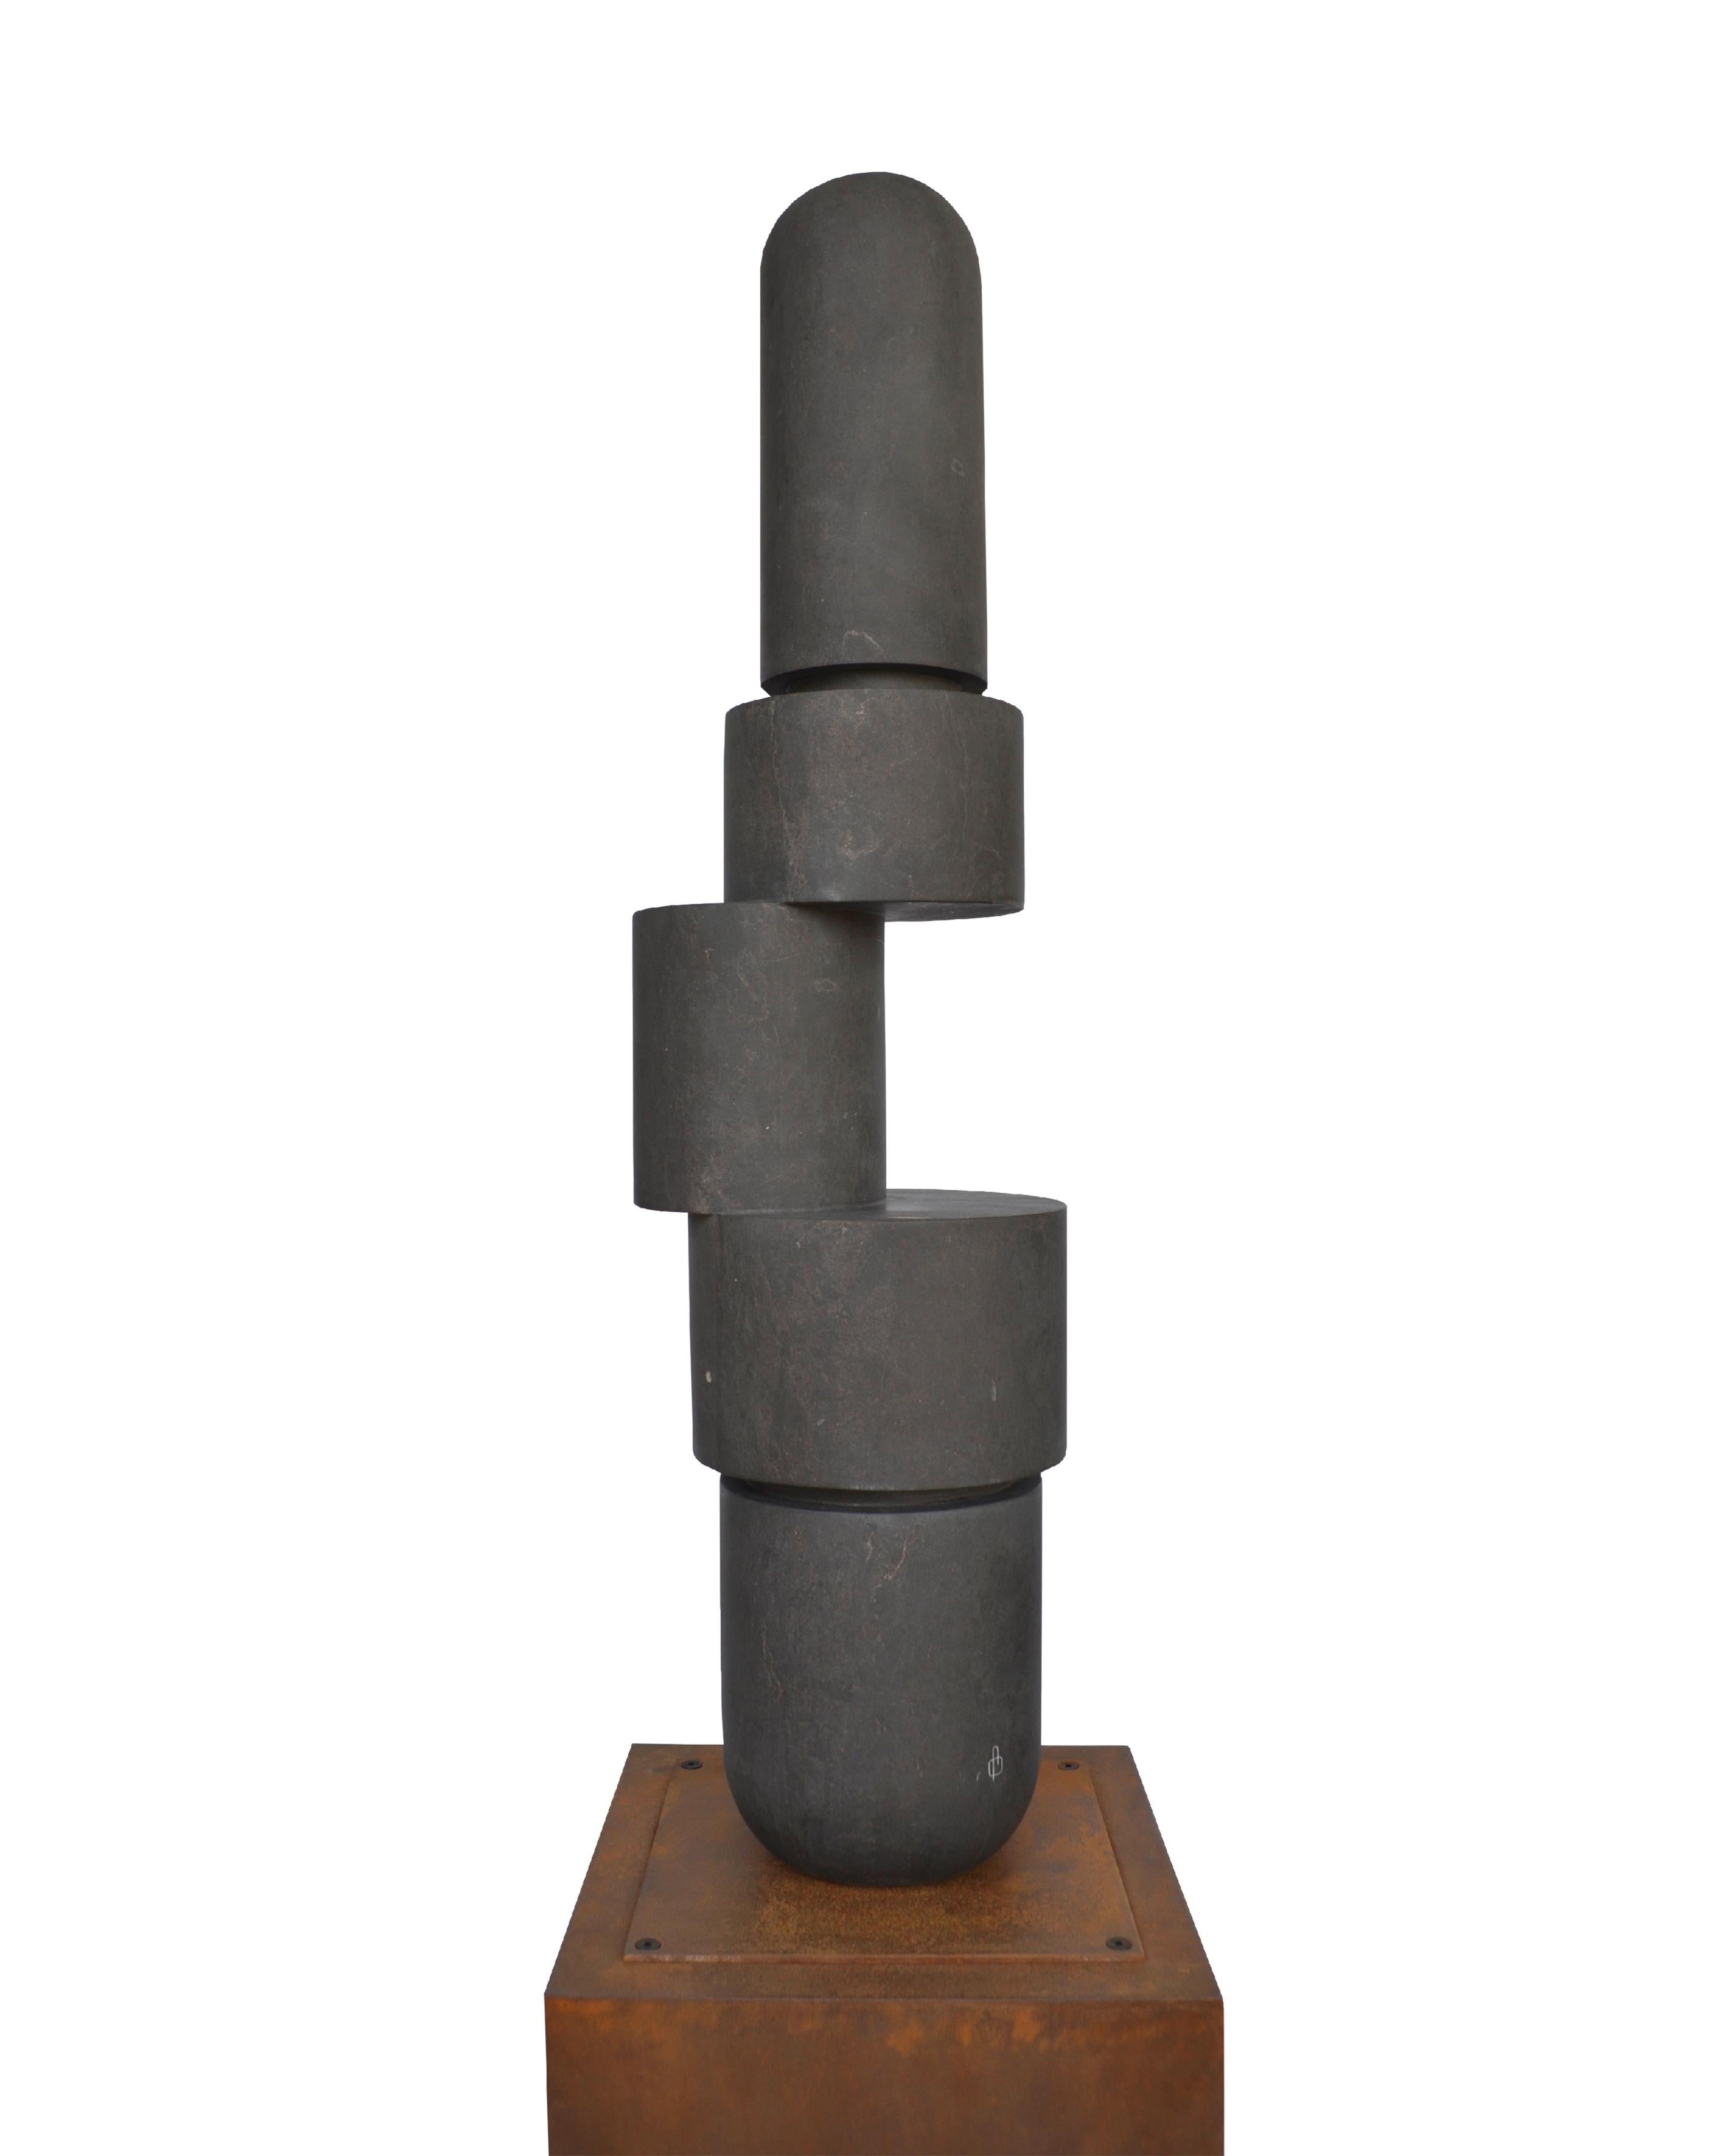 Deconstrucción Modular III Sculpture by Borja Barrajón
Dimensions: D 25 x W 25 x H 90 cm.
Materials: Black marble.

Borja Barrajón Acedo (Madrid, 1985) began his training as a sculptor at the Faculty of Fine Arts in Madrid in 2006. His passion for